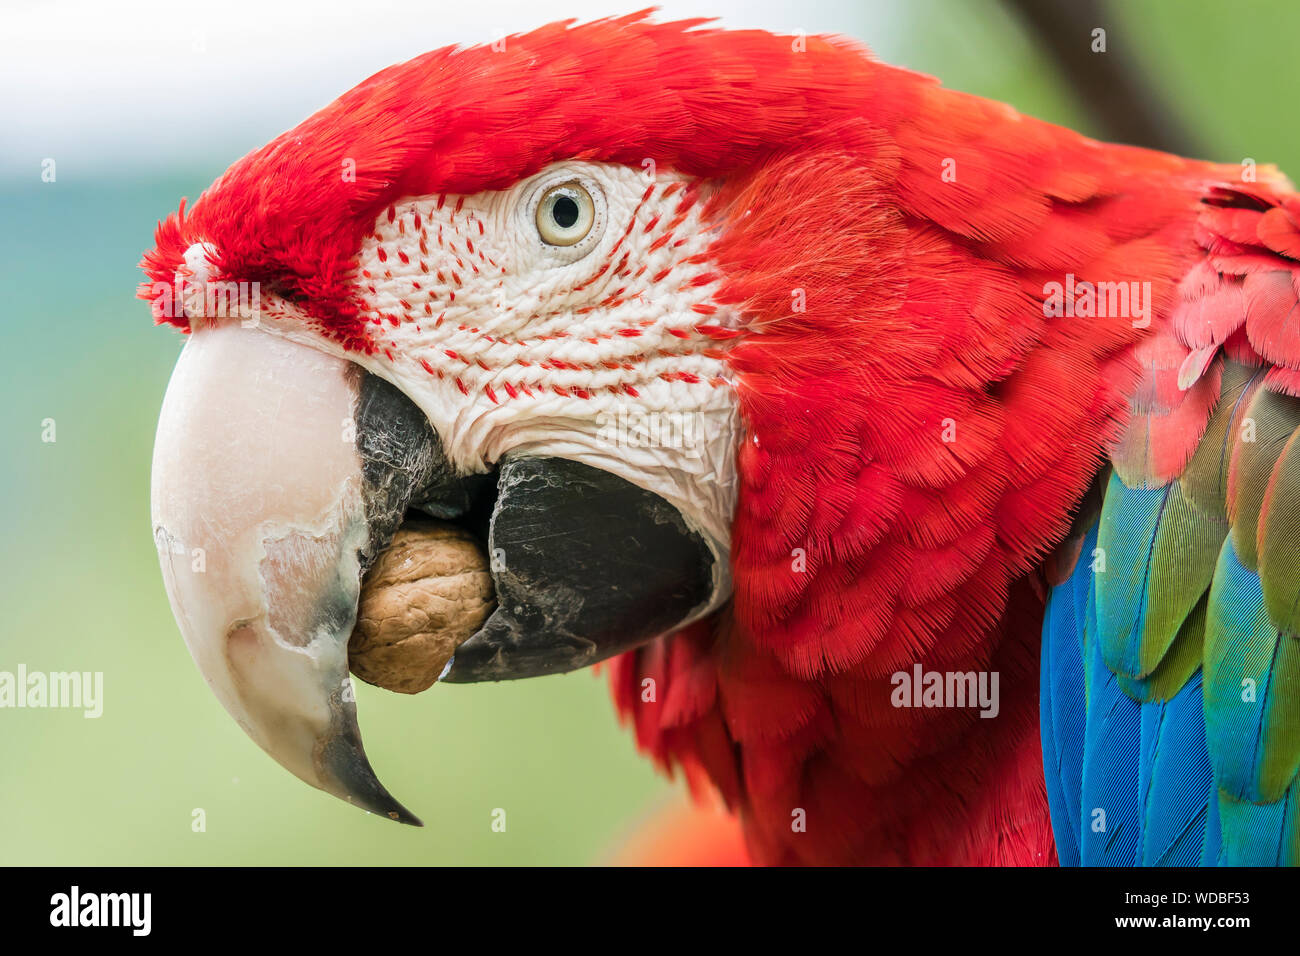 Rosso-verde macaw è mangiare una noce / Rotgrüner Ara knackt eine Walnuss Foto Stock